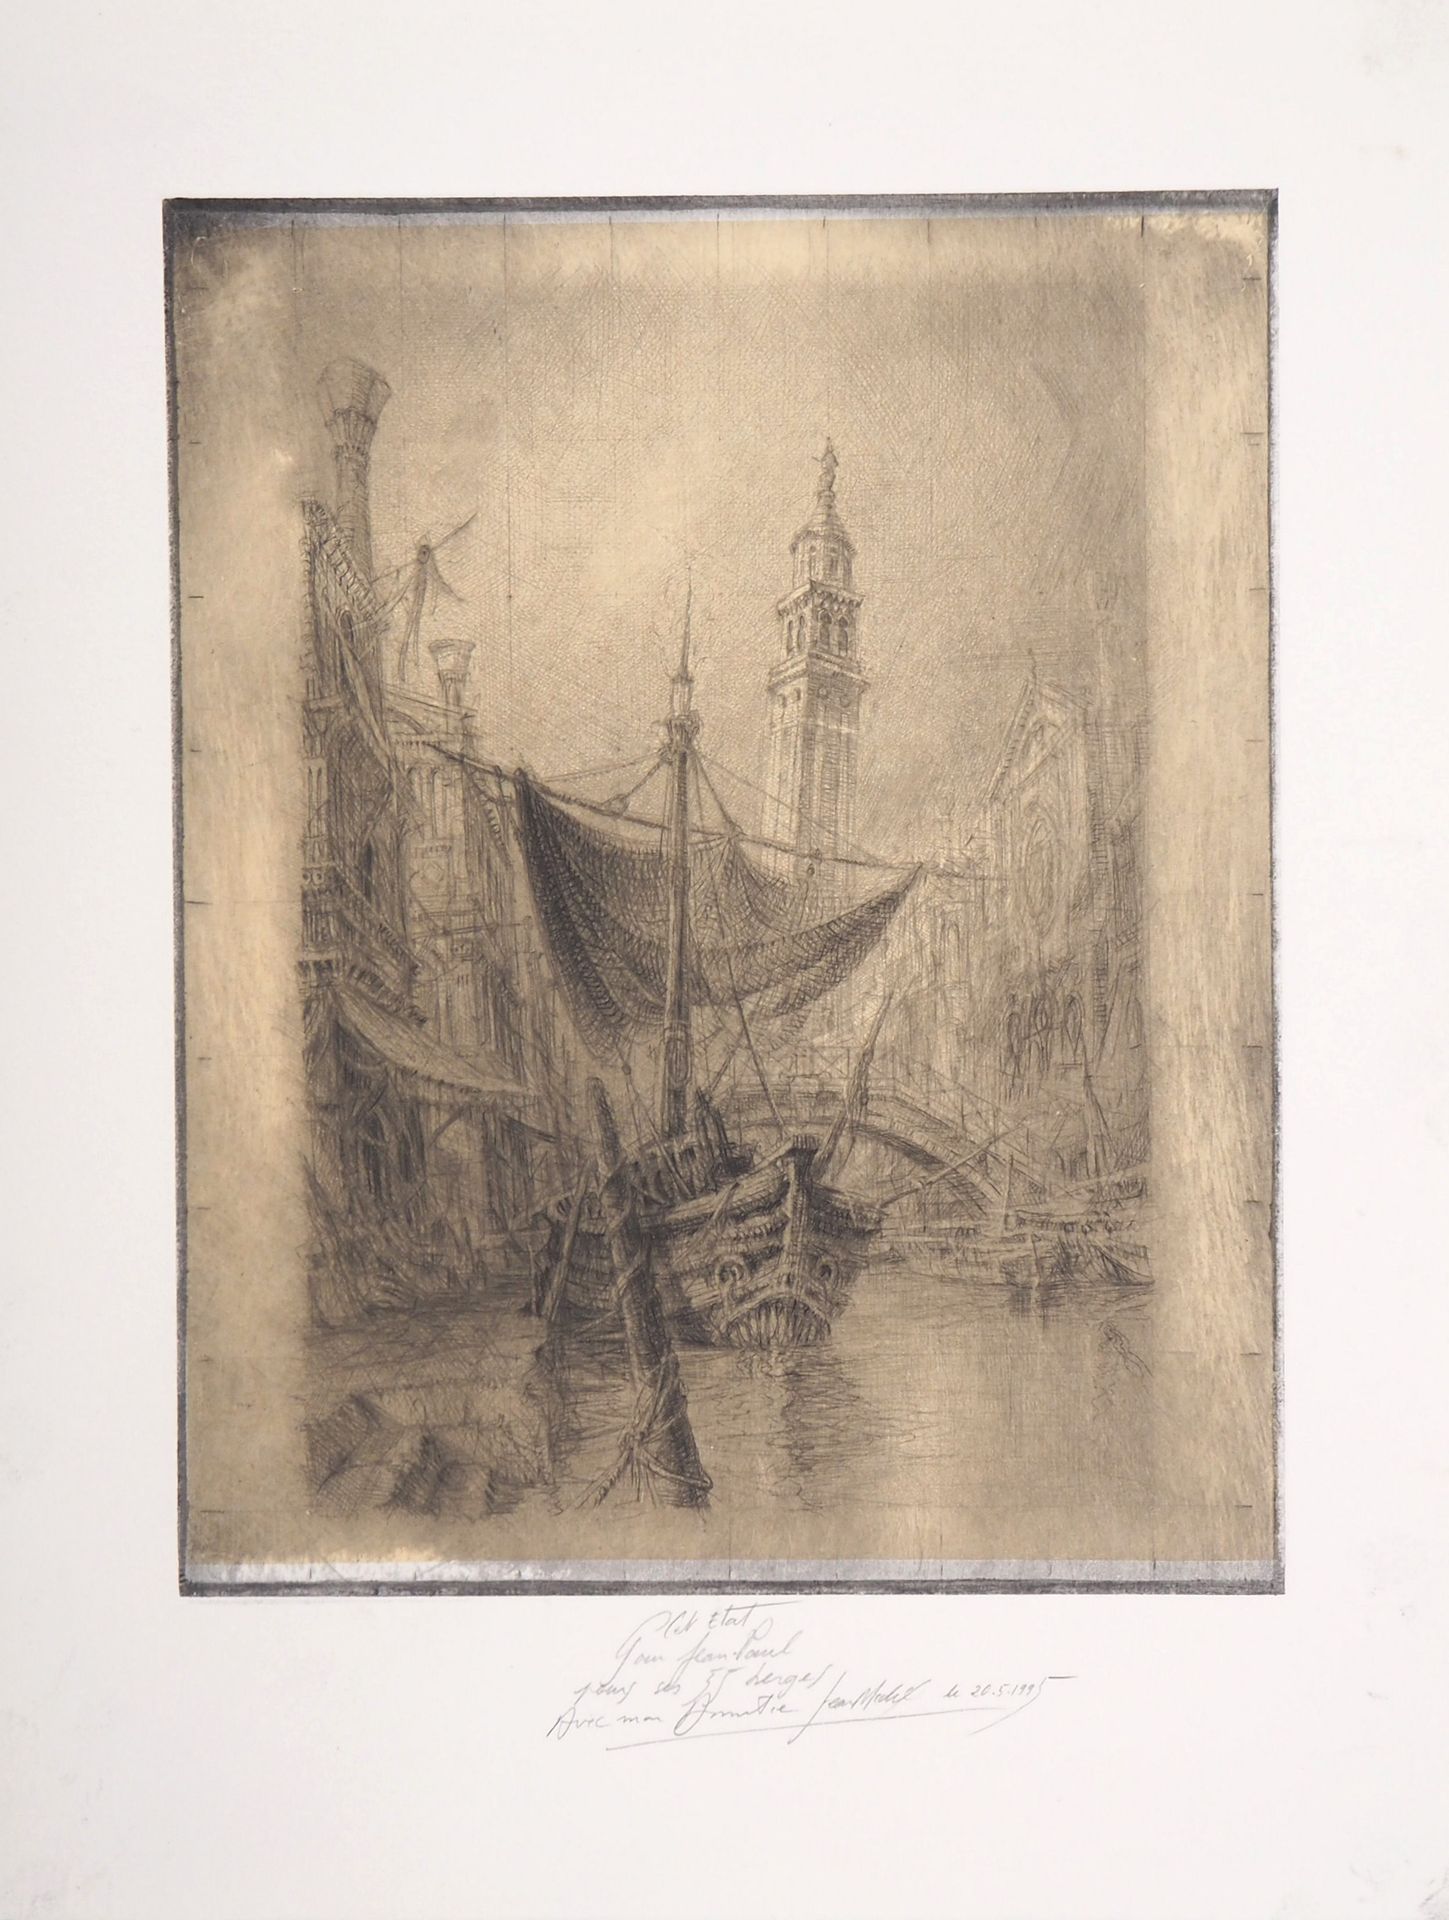 Jean-Michel MATHIEUX-MARIE Jean-Michel MATHIEUX-MARIE

威尼斯的帆船

原始干点蚀刻画

铅笔签名的艺术家&hellip;